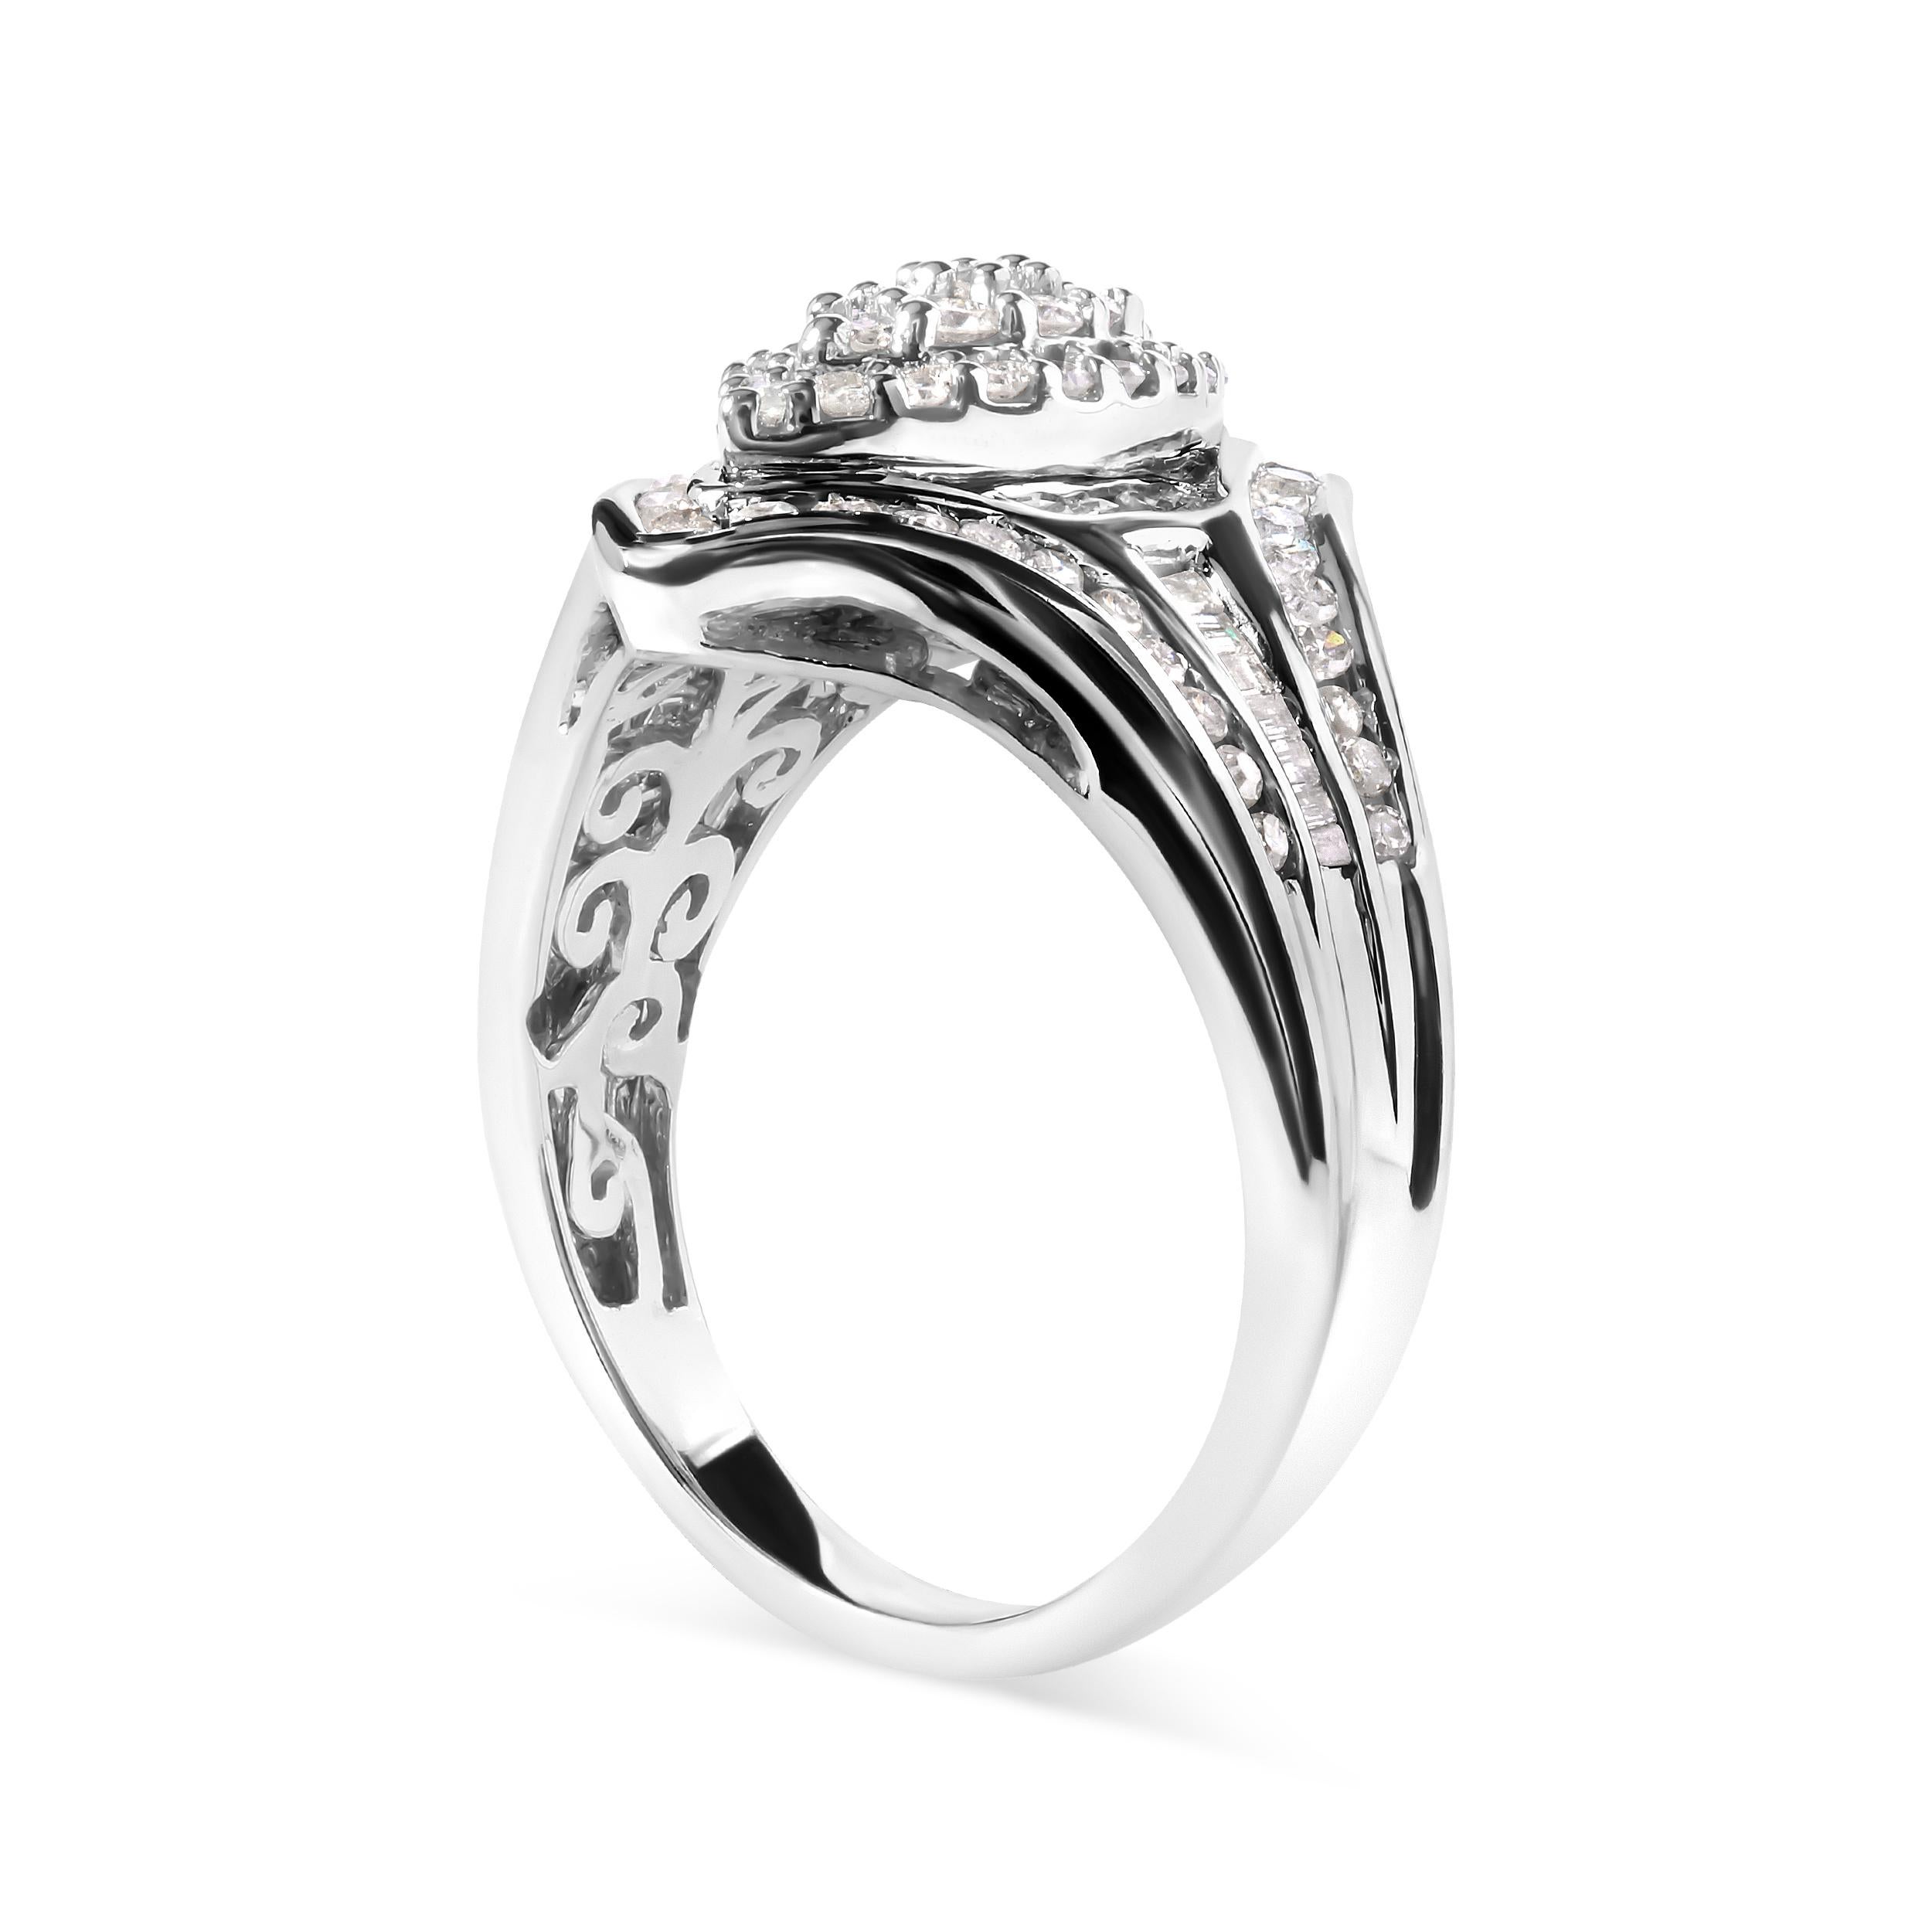 4 carat diamond cluster ring